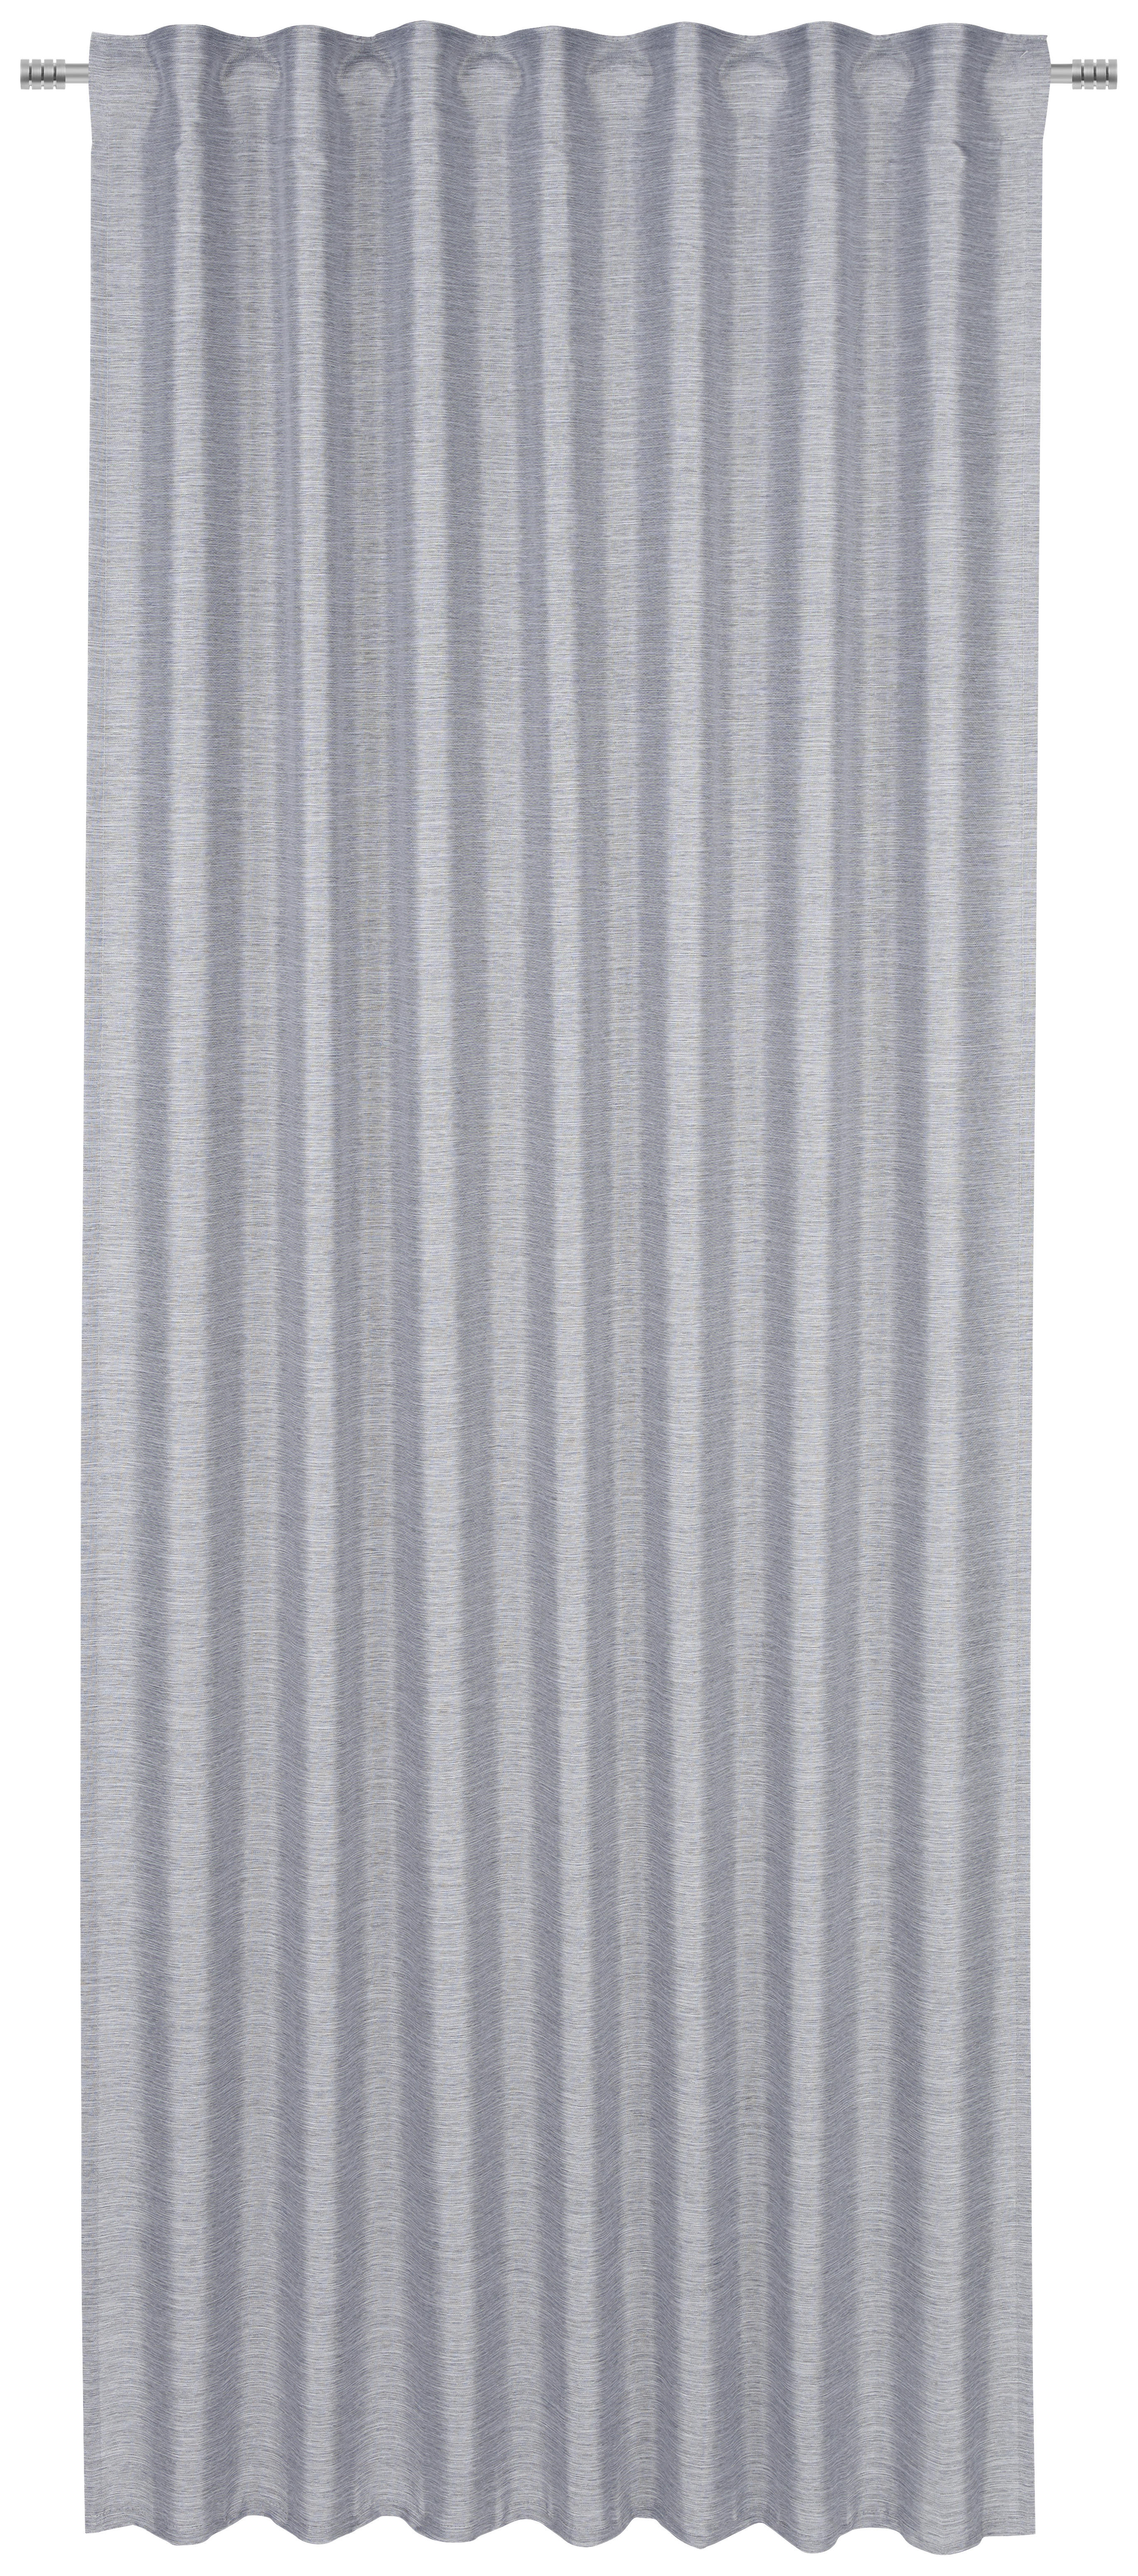 FERTIGVORHANG Kira halbtransparent 135/245 cm   - Anthrazit/Silberfarben, Basics, Textil (135/245cm) - Esposa